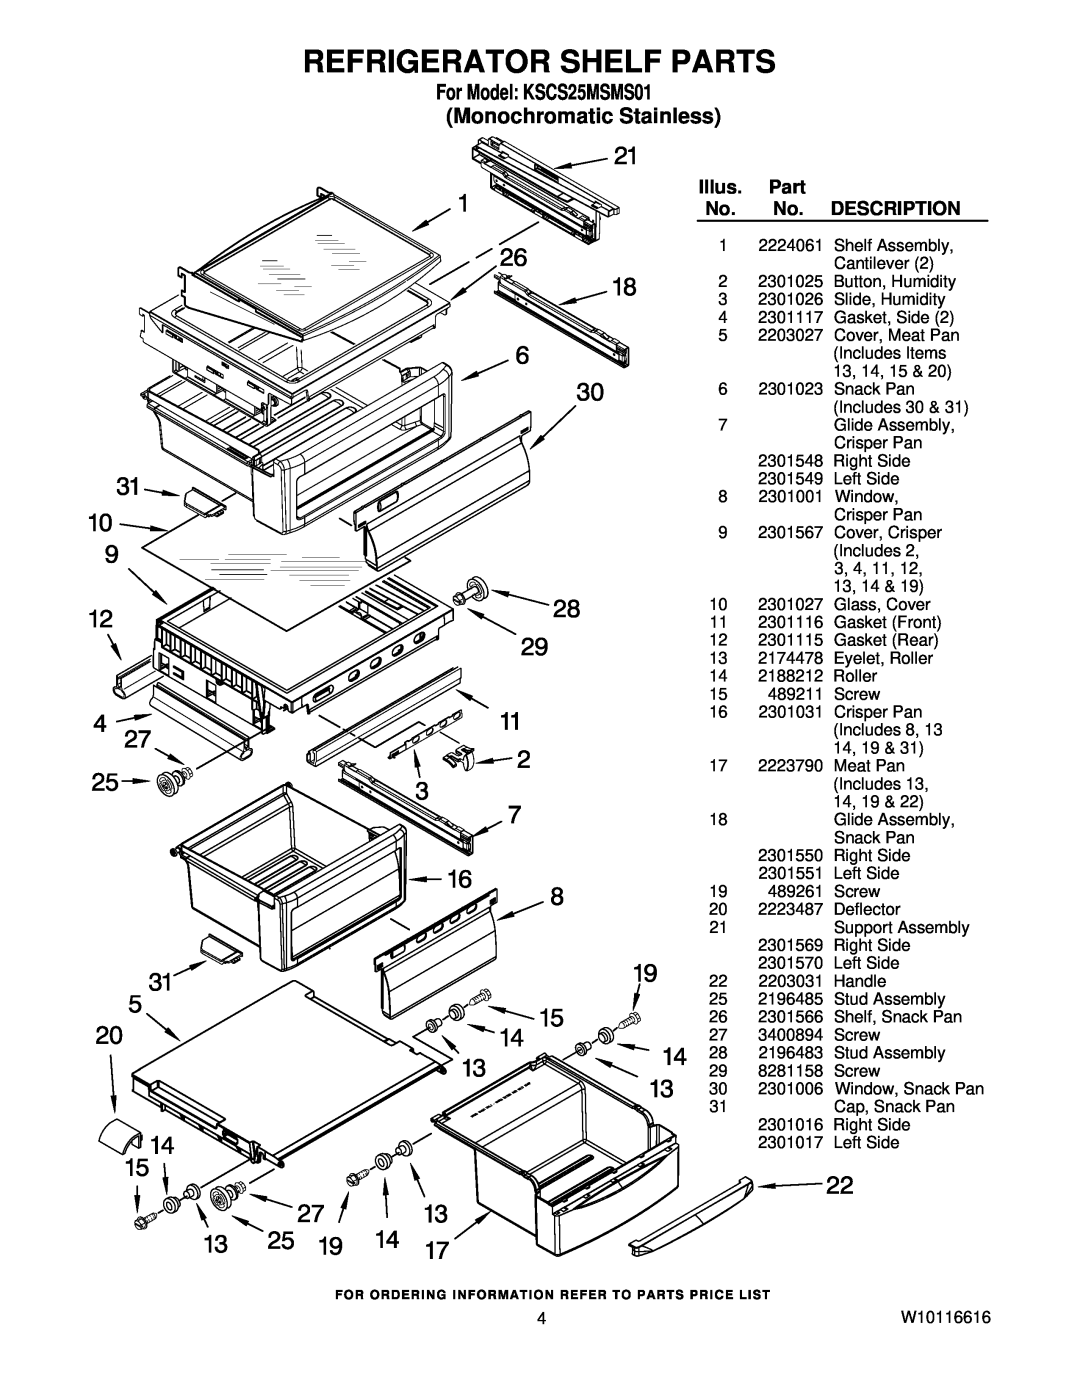 KitchenAid manual Refrigerator Shelf Parts, For Model KSCS25MSMS01 Monochromatic Stainless, Illus, Description 